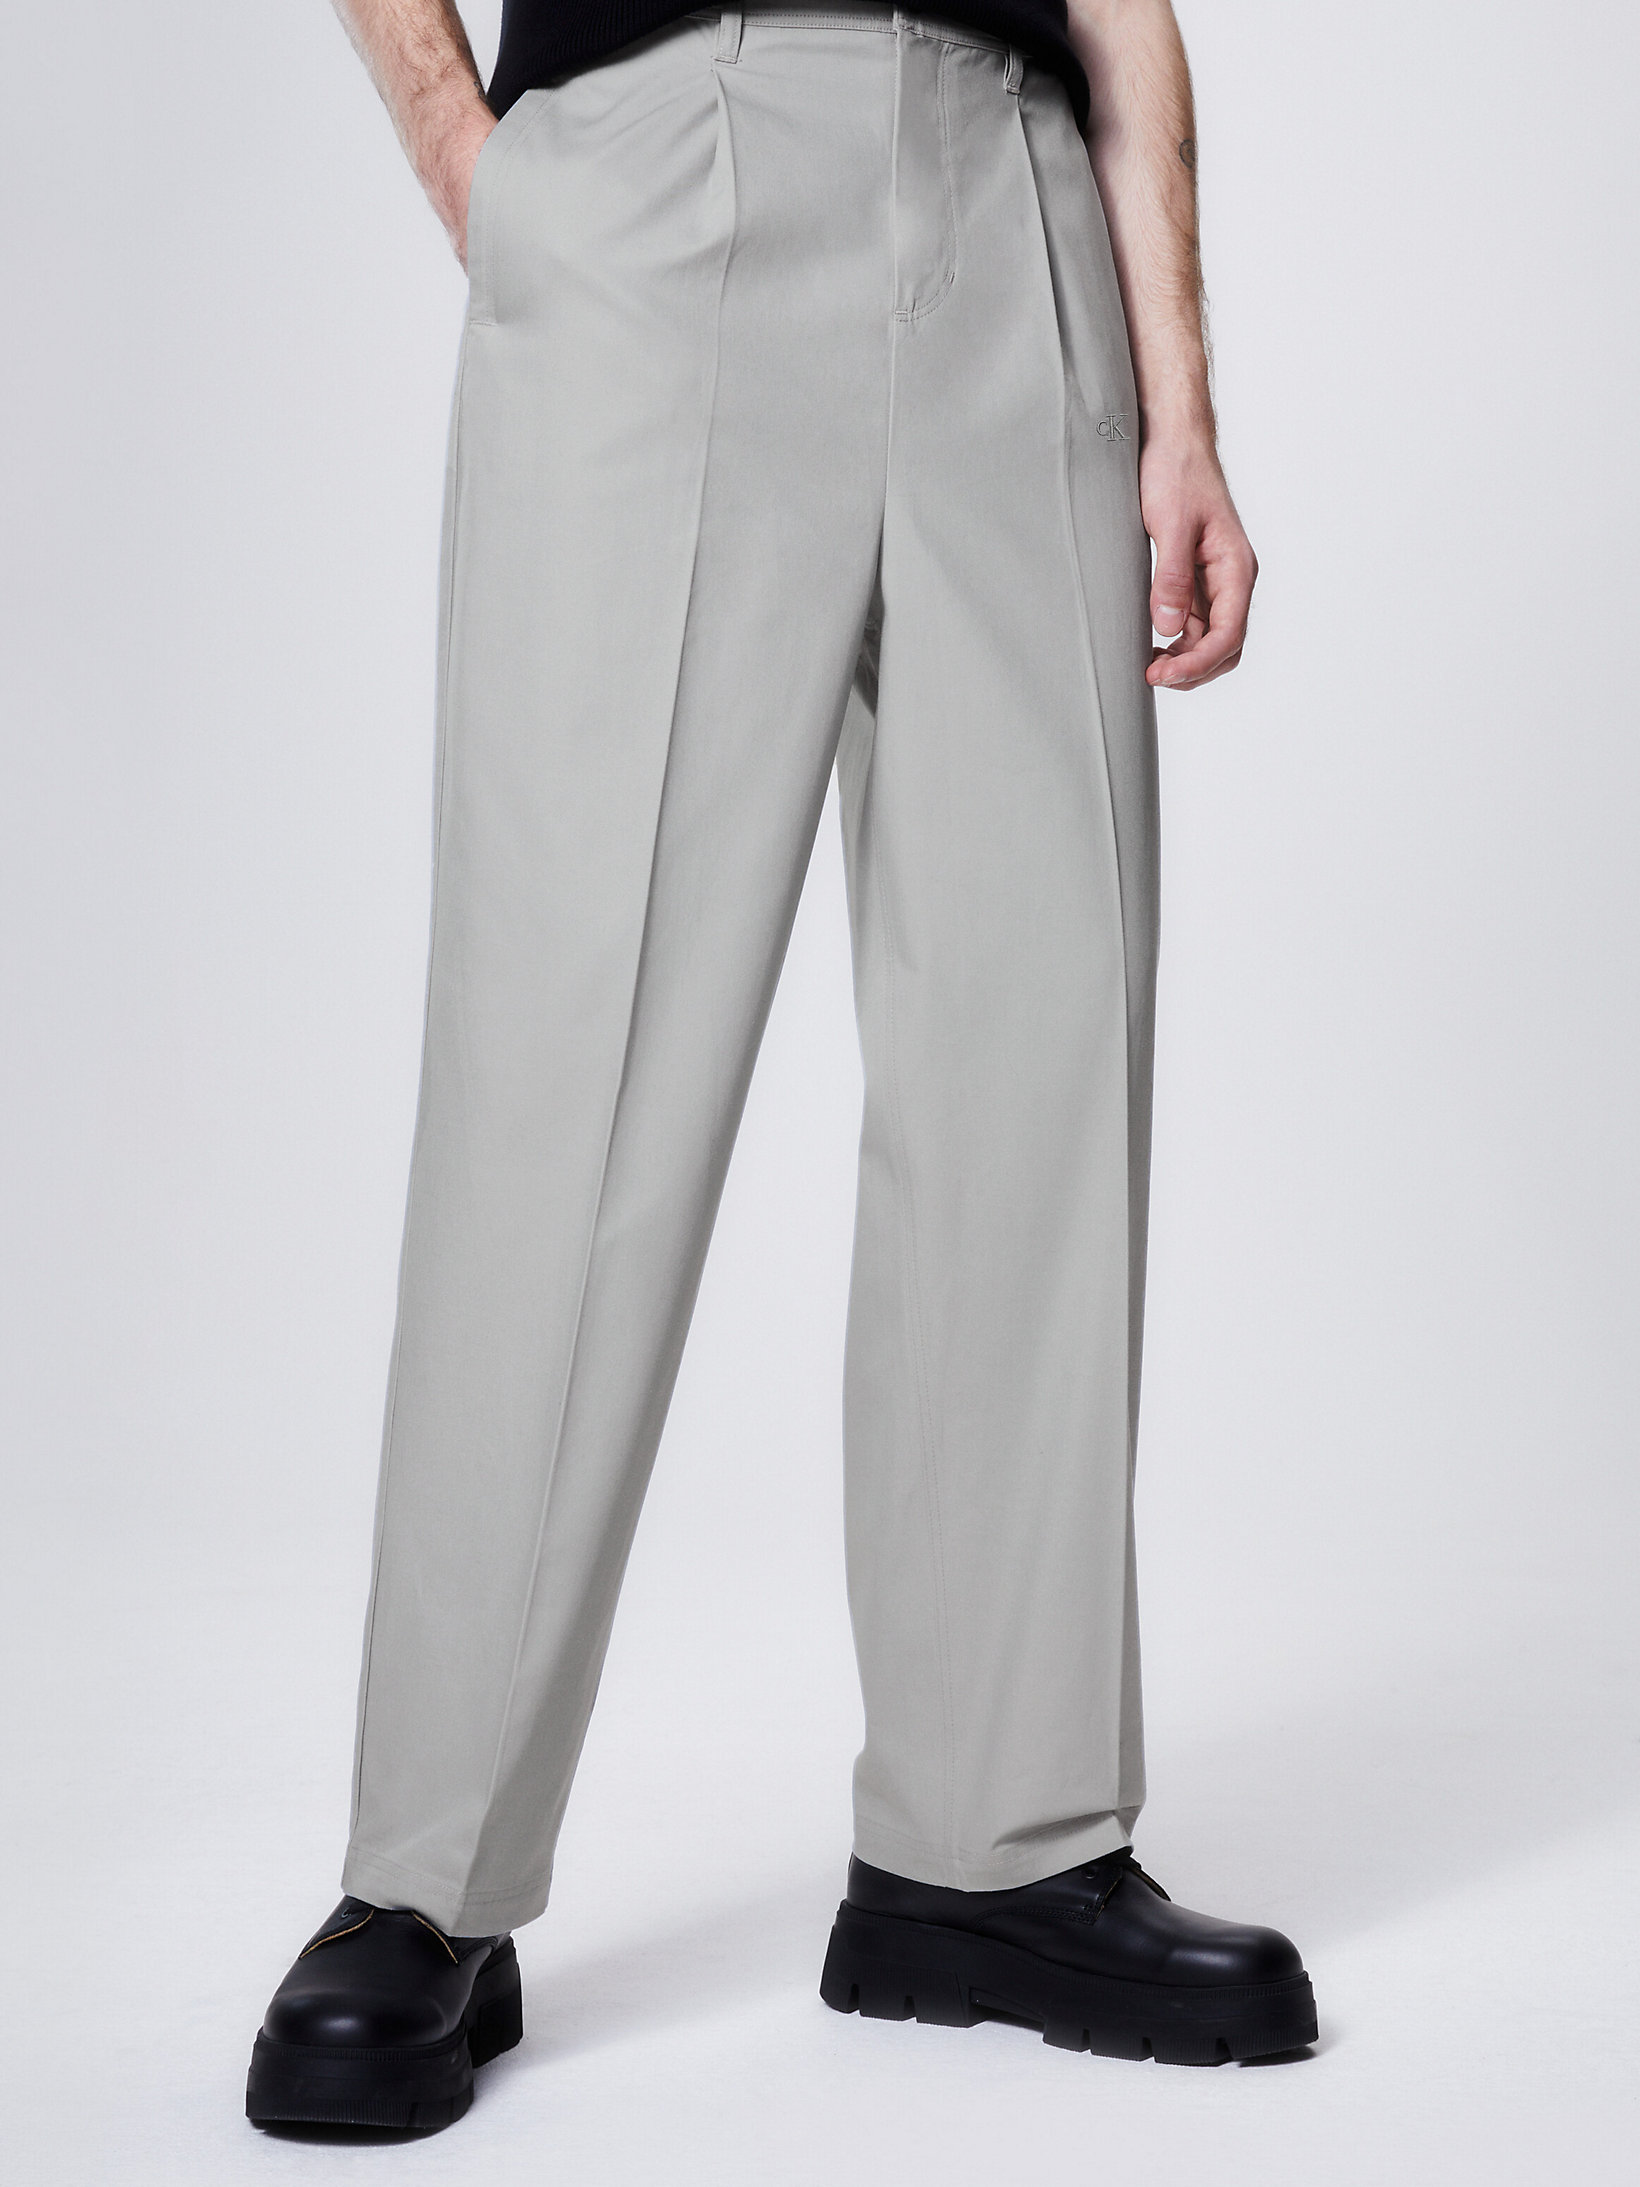 Zinc Alloy Unisex Cotton Twill Trousers undefined unisex Calvin Klein